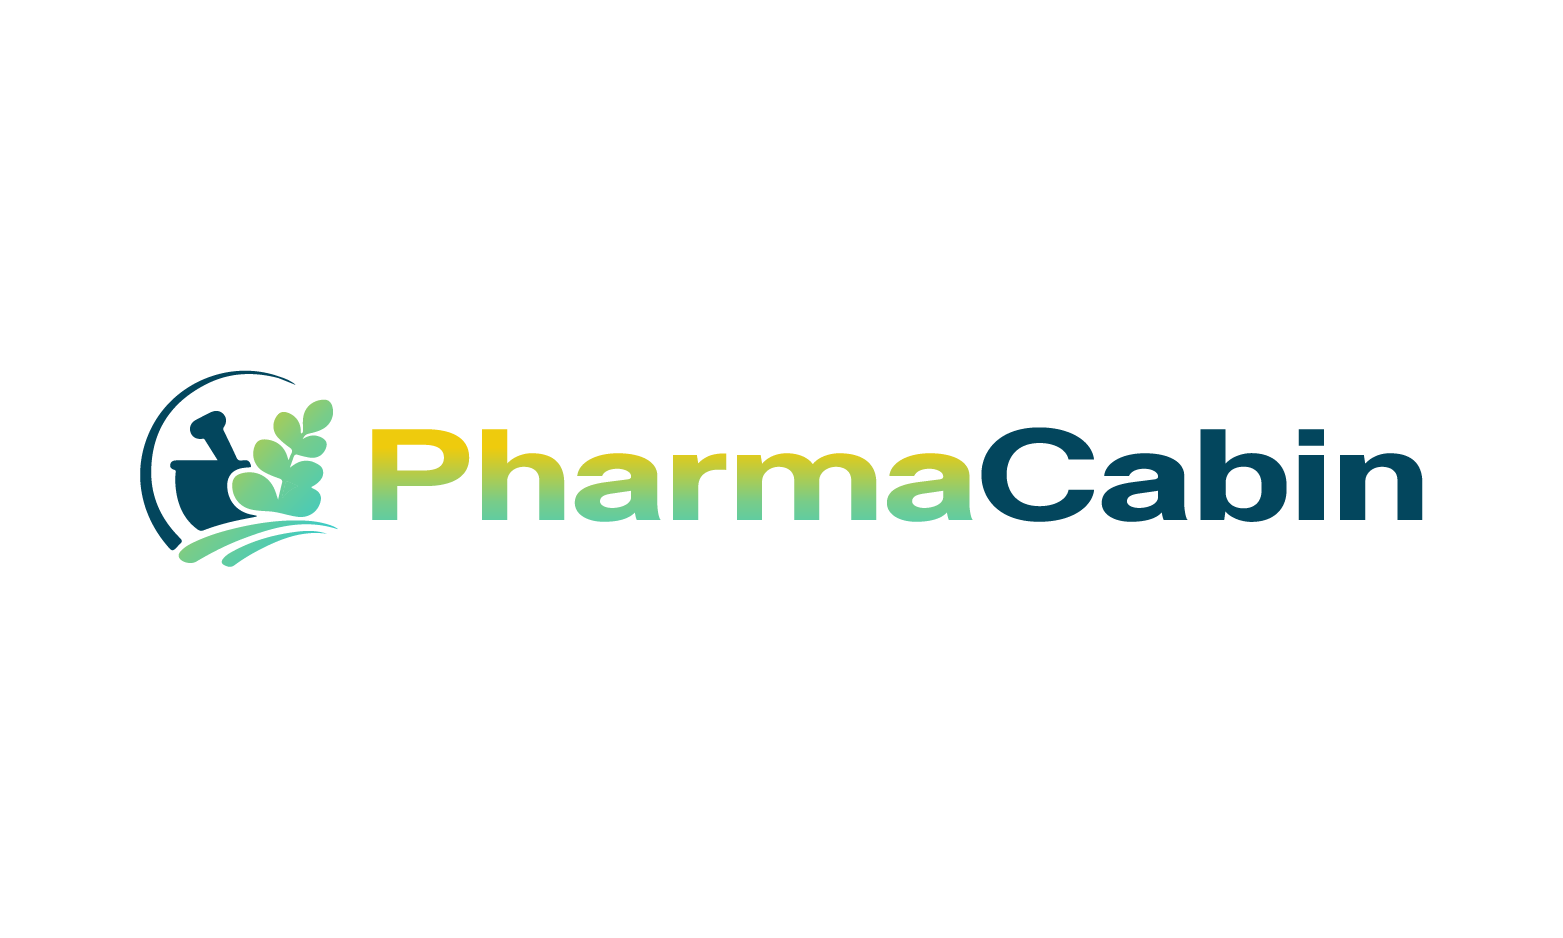 PharmaCabin.com - Creative brandable domain for sale